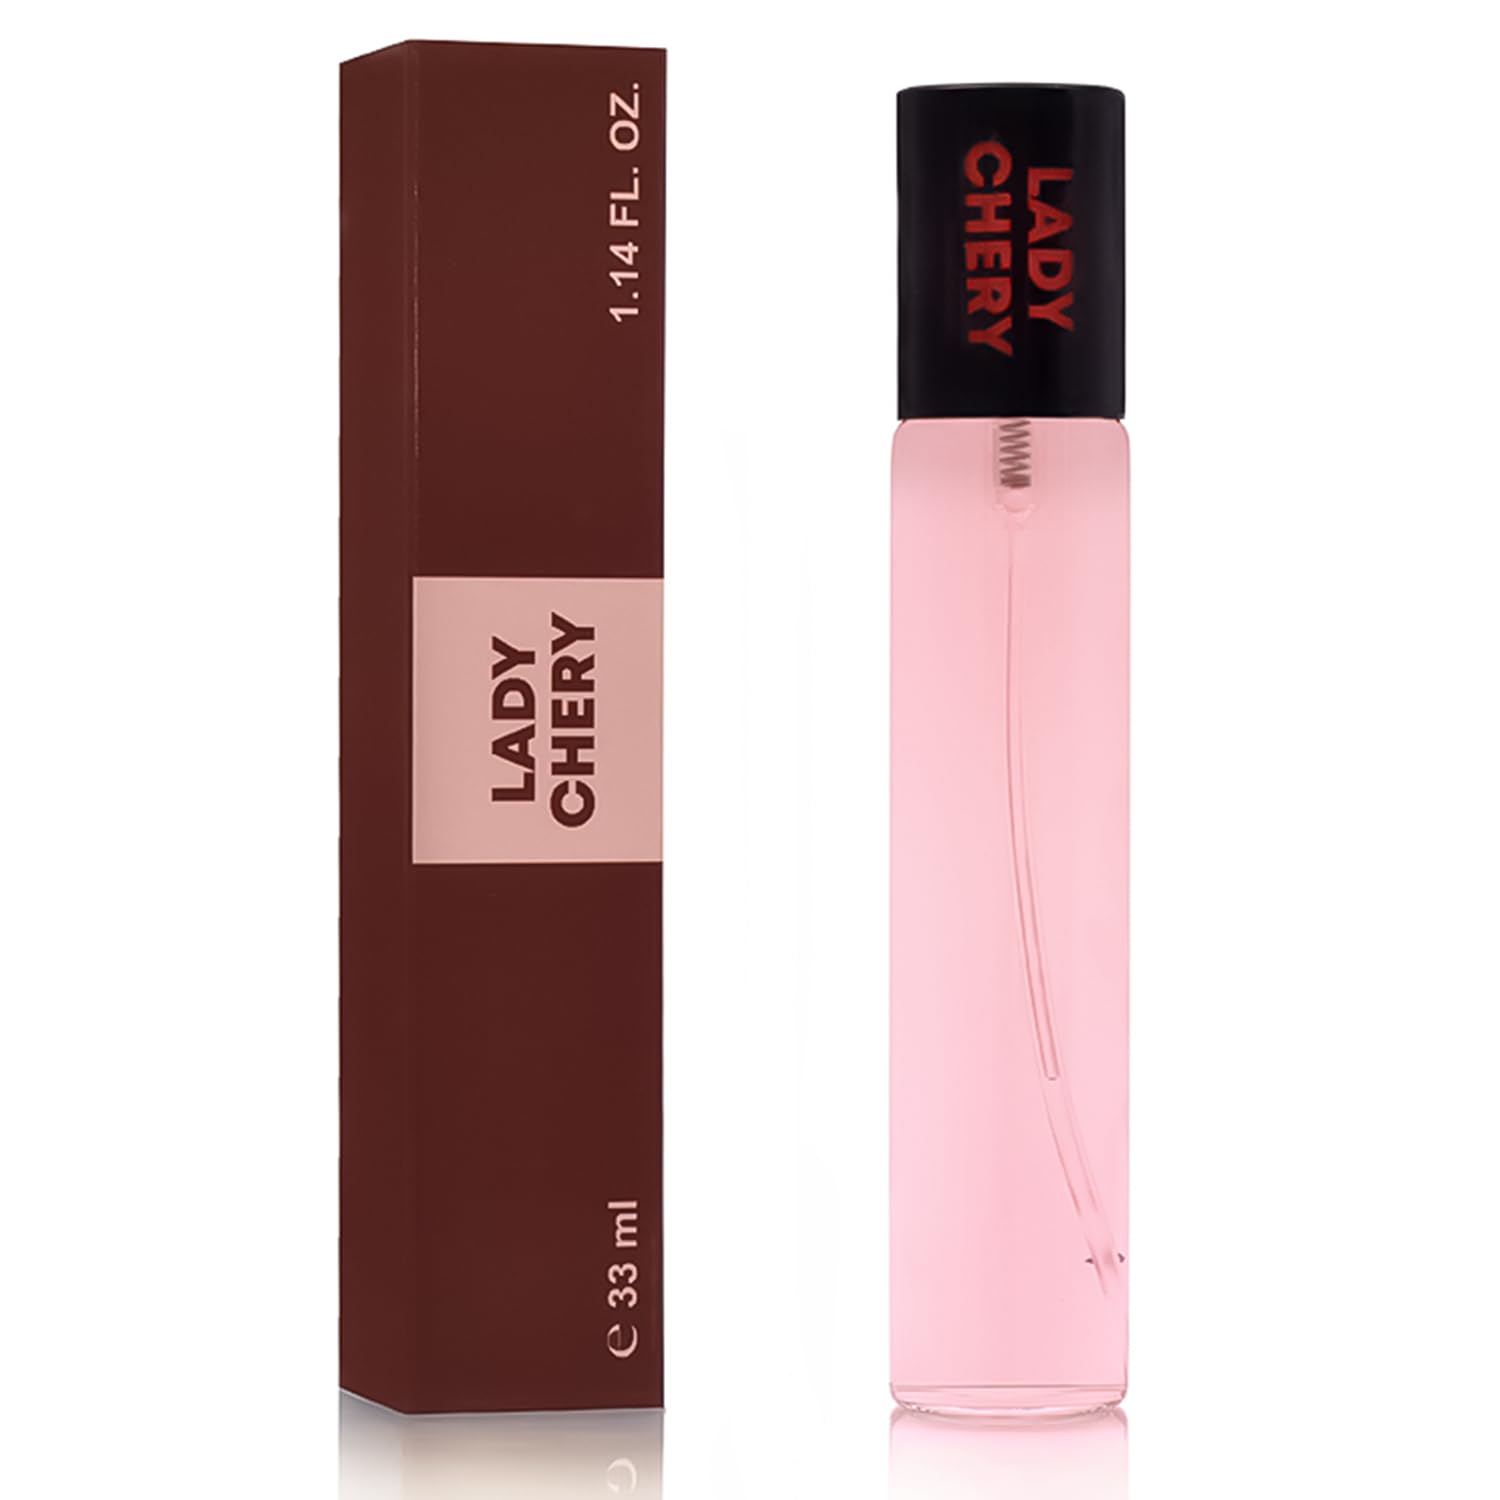 Women\'s Perfume Spray - The Inspired Pendant as Eau de Parfum for Drivers and Car - 33 ml Bottle for Handbag & On the Go (Lady Chery)